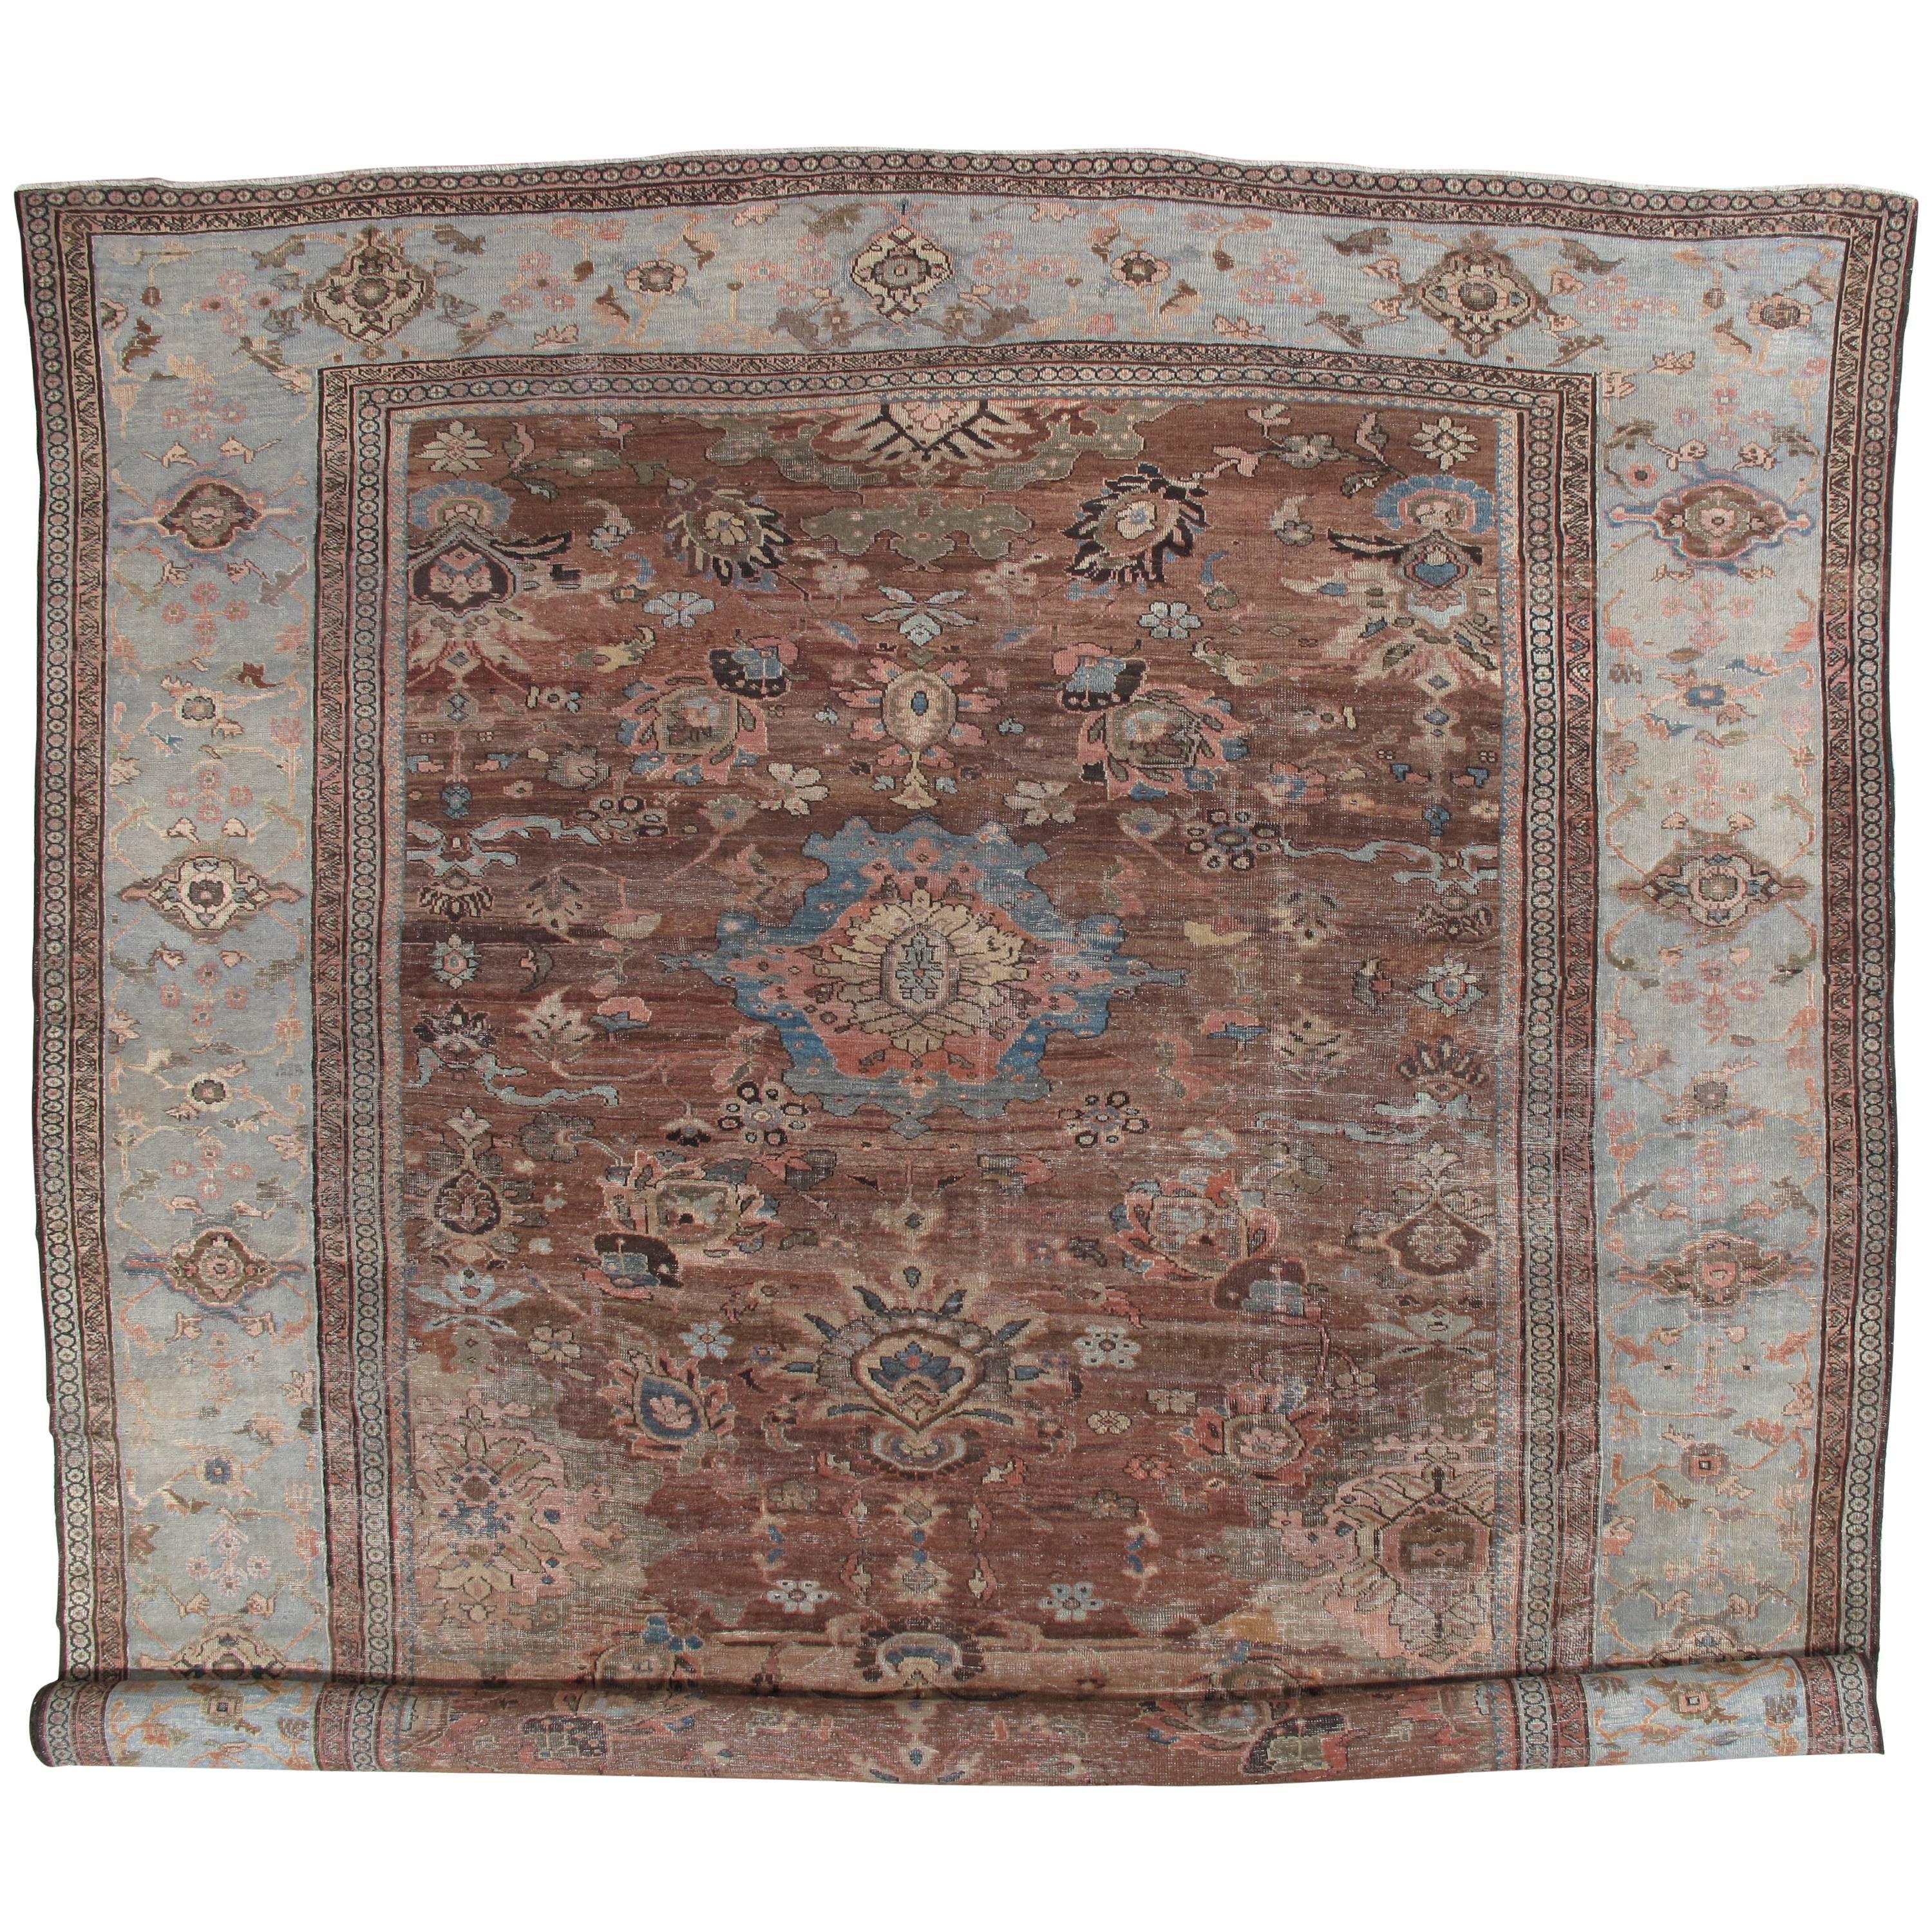 Antique Persian Sultanabad Carpet, Handmade Oriental Rug, Light Blue, Terracotta